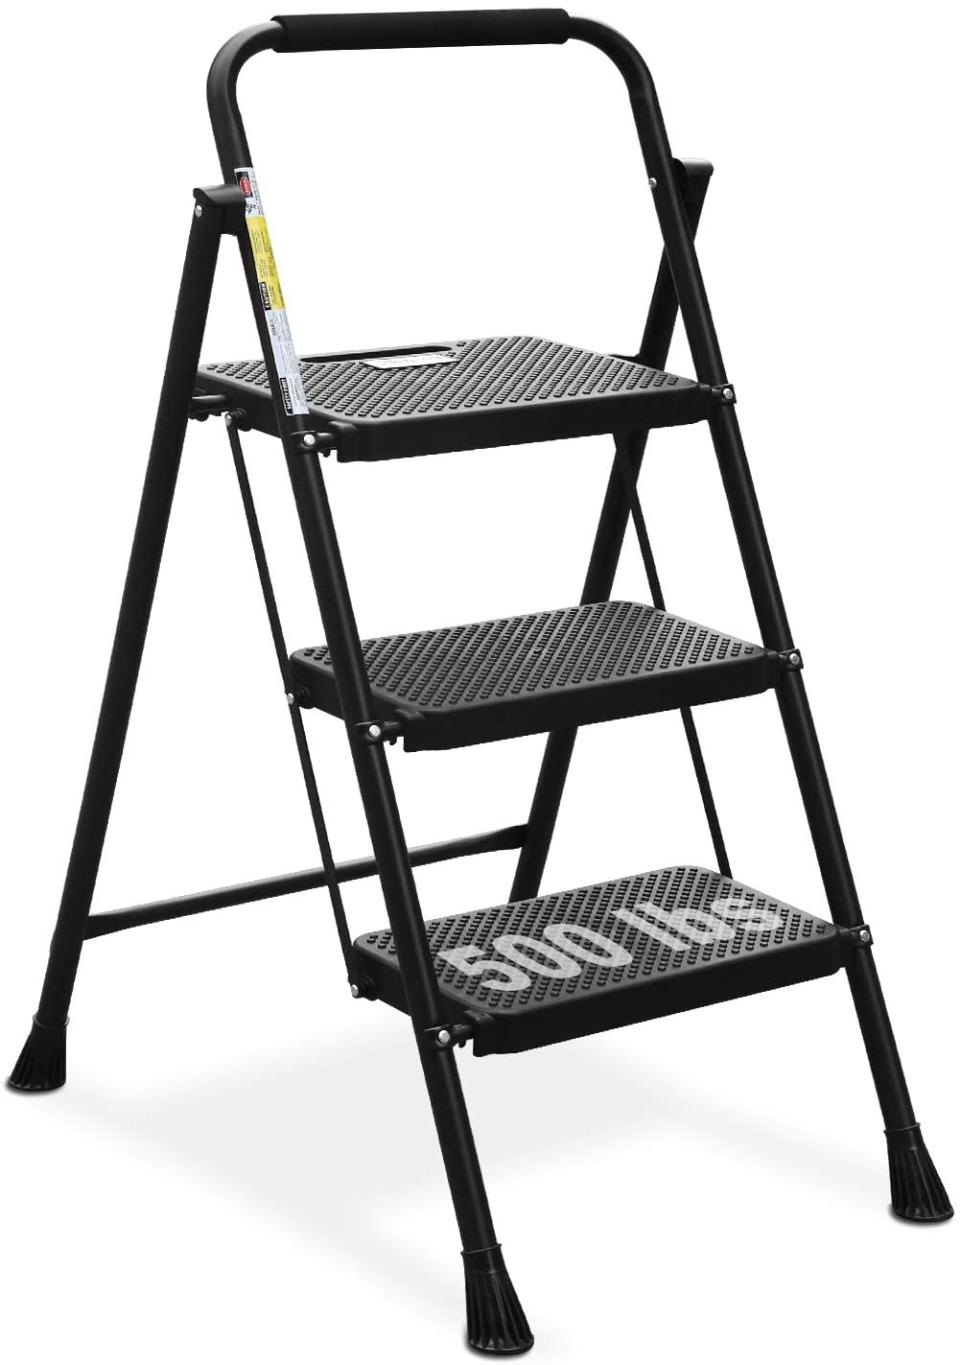 HBTower 3 Step Ladder, best step ladder